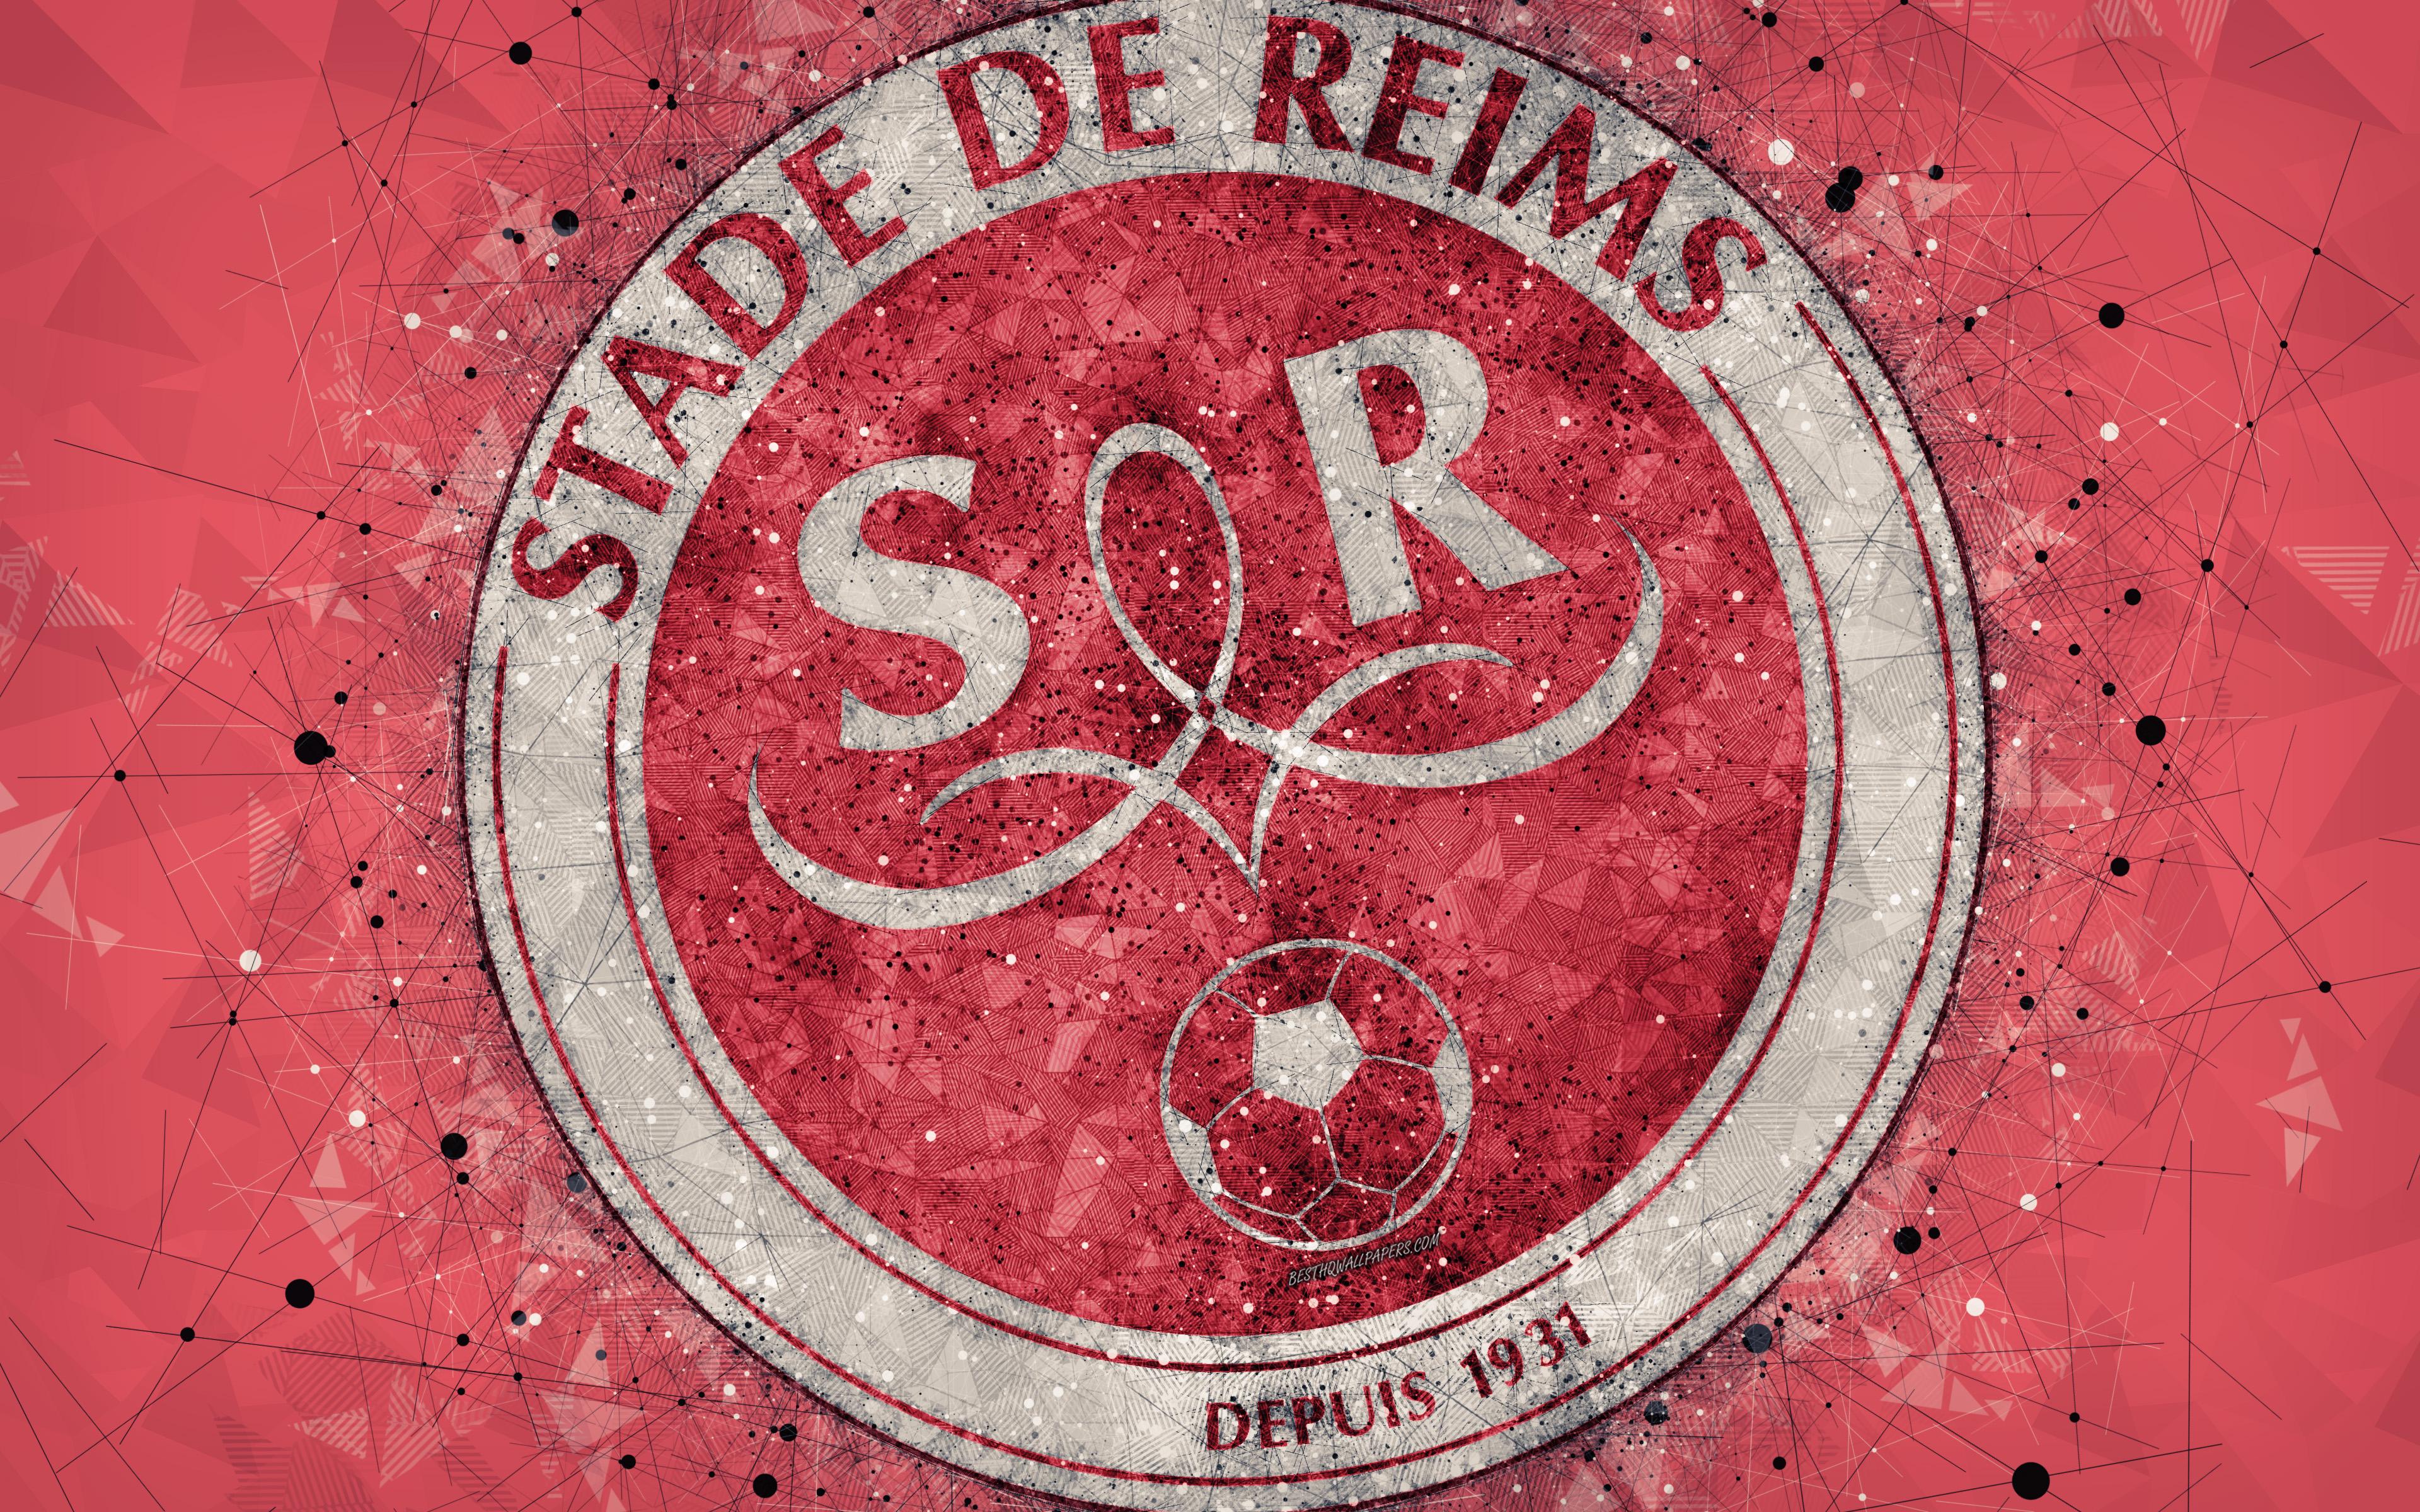 Download wallpaper Stade de Reims, 4k, logo, geometric art, French